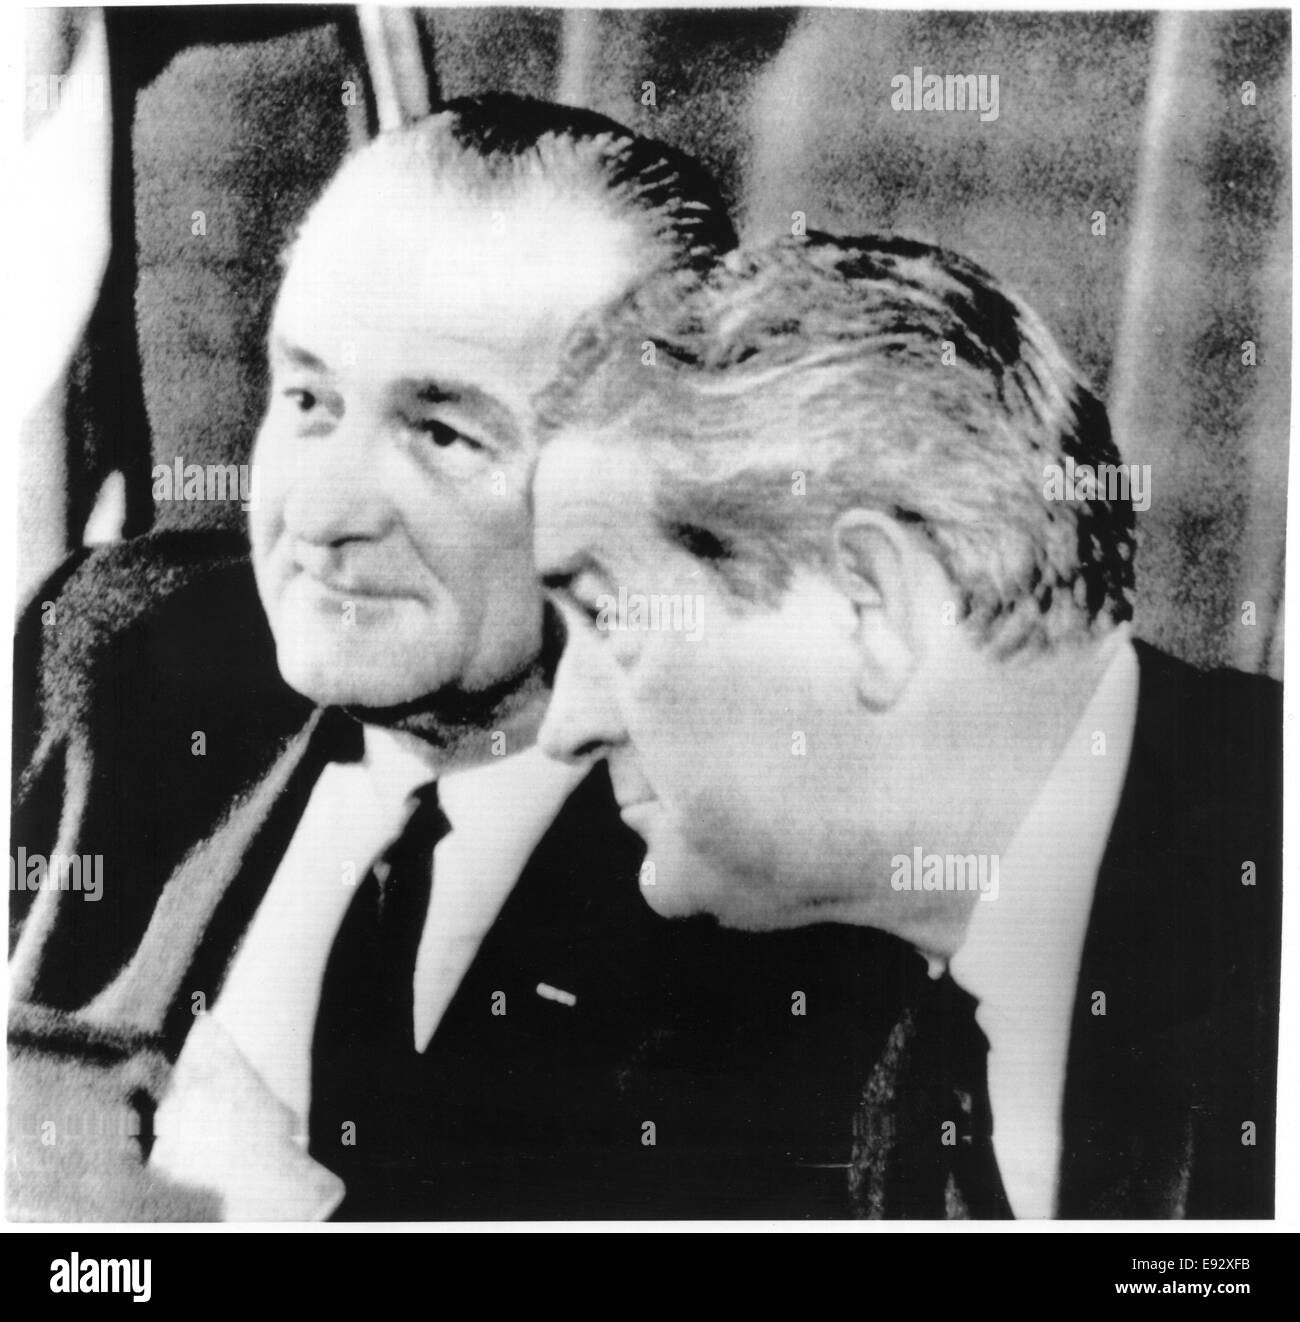 U.S. President Lyndon Johnson and Texas Governor John Connally, Portrait, 1965 Stock Photo